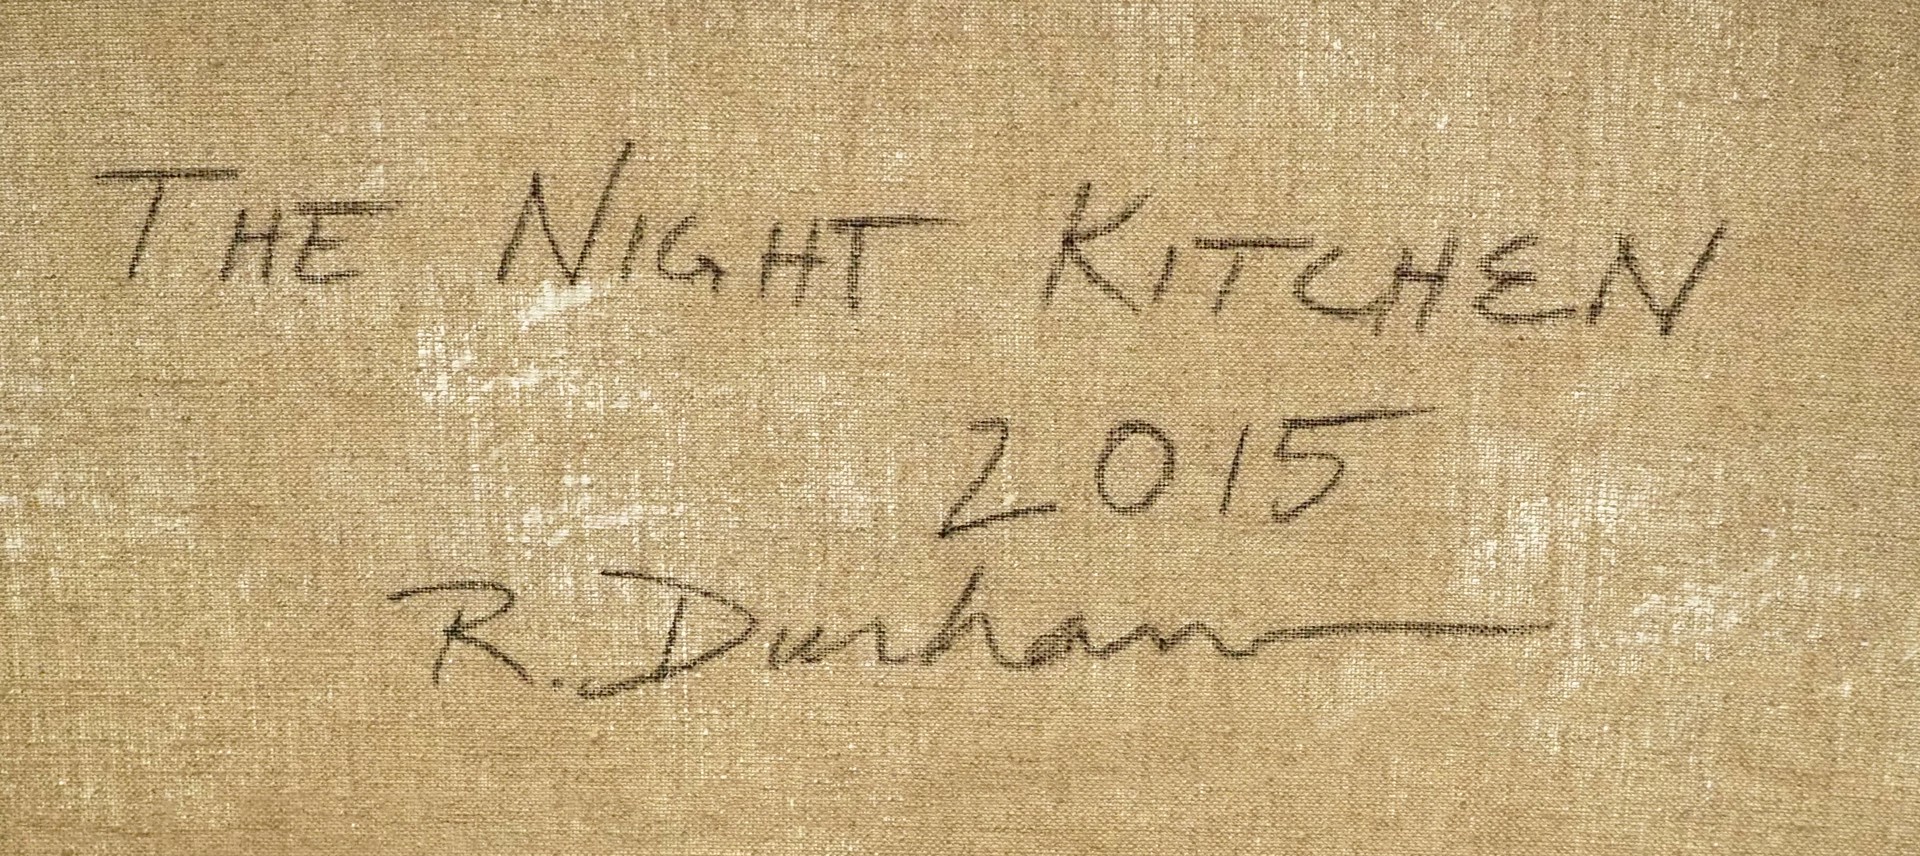 The Night Kitchen by Bob Durham